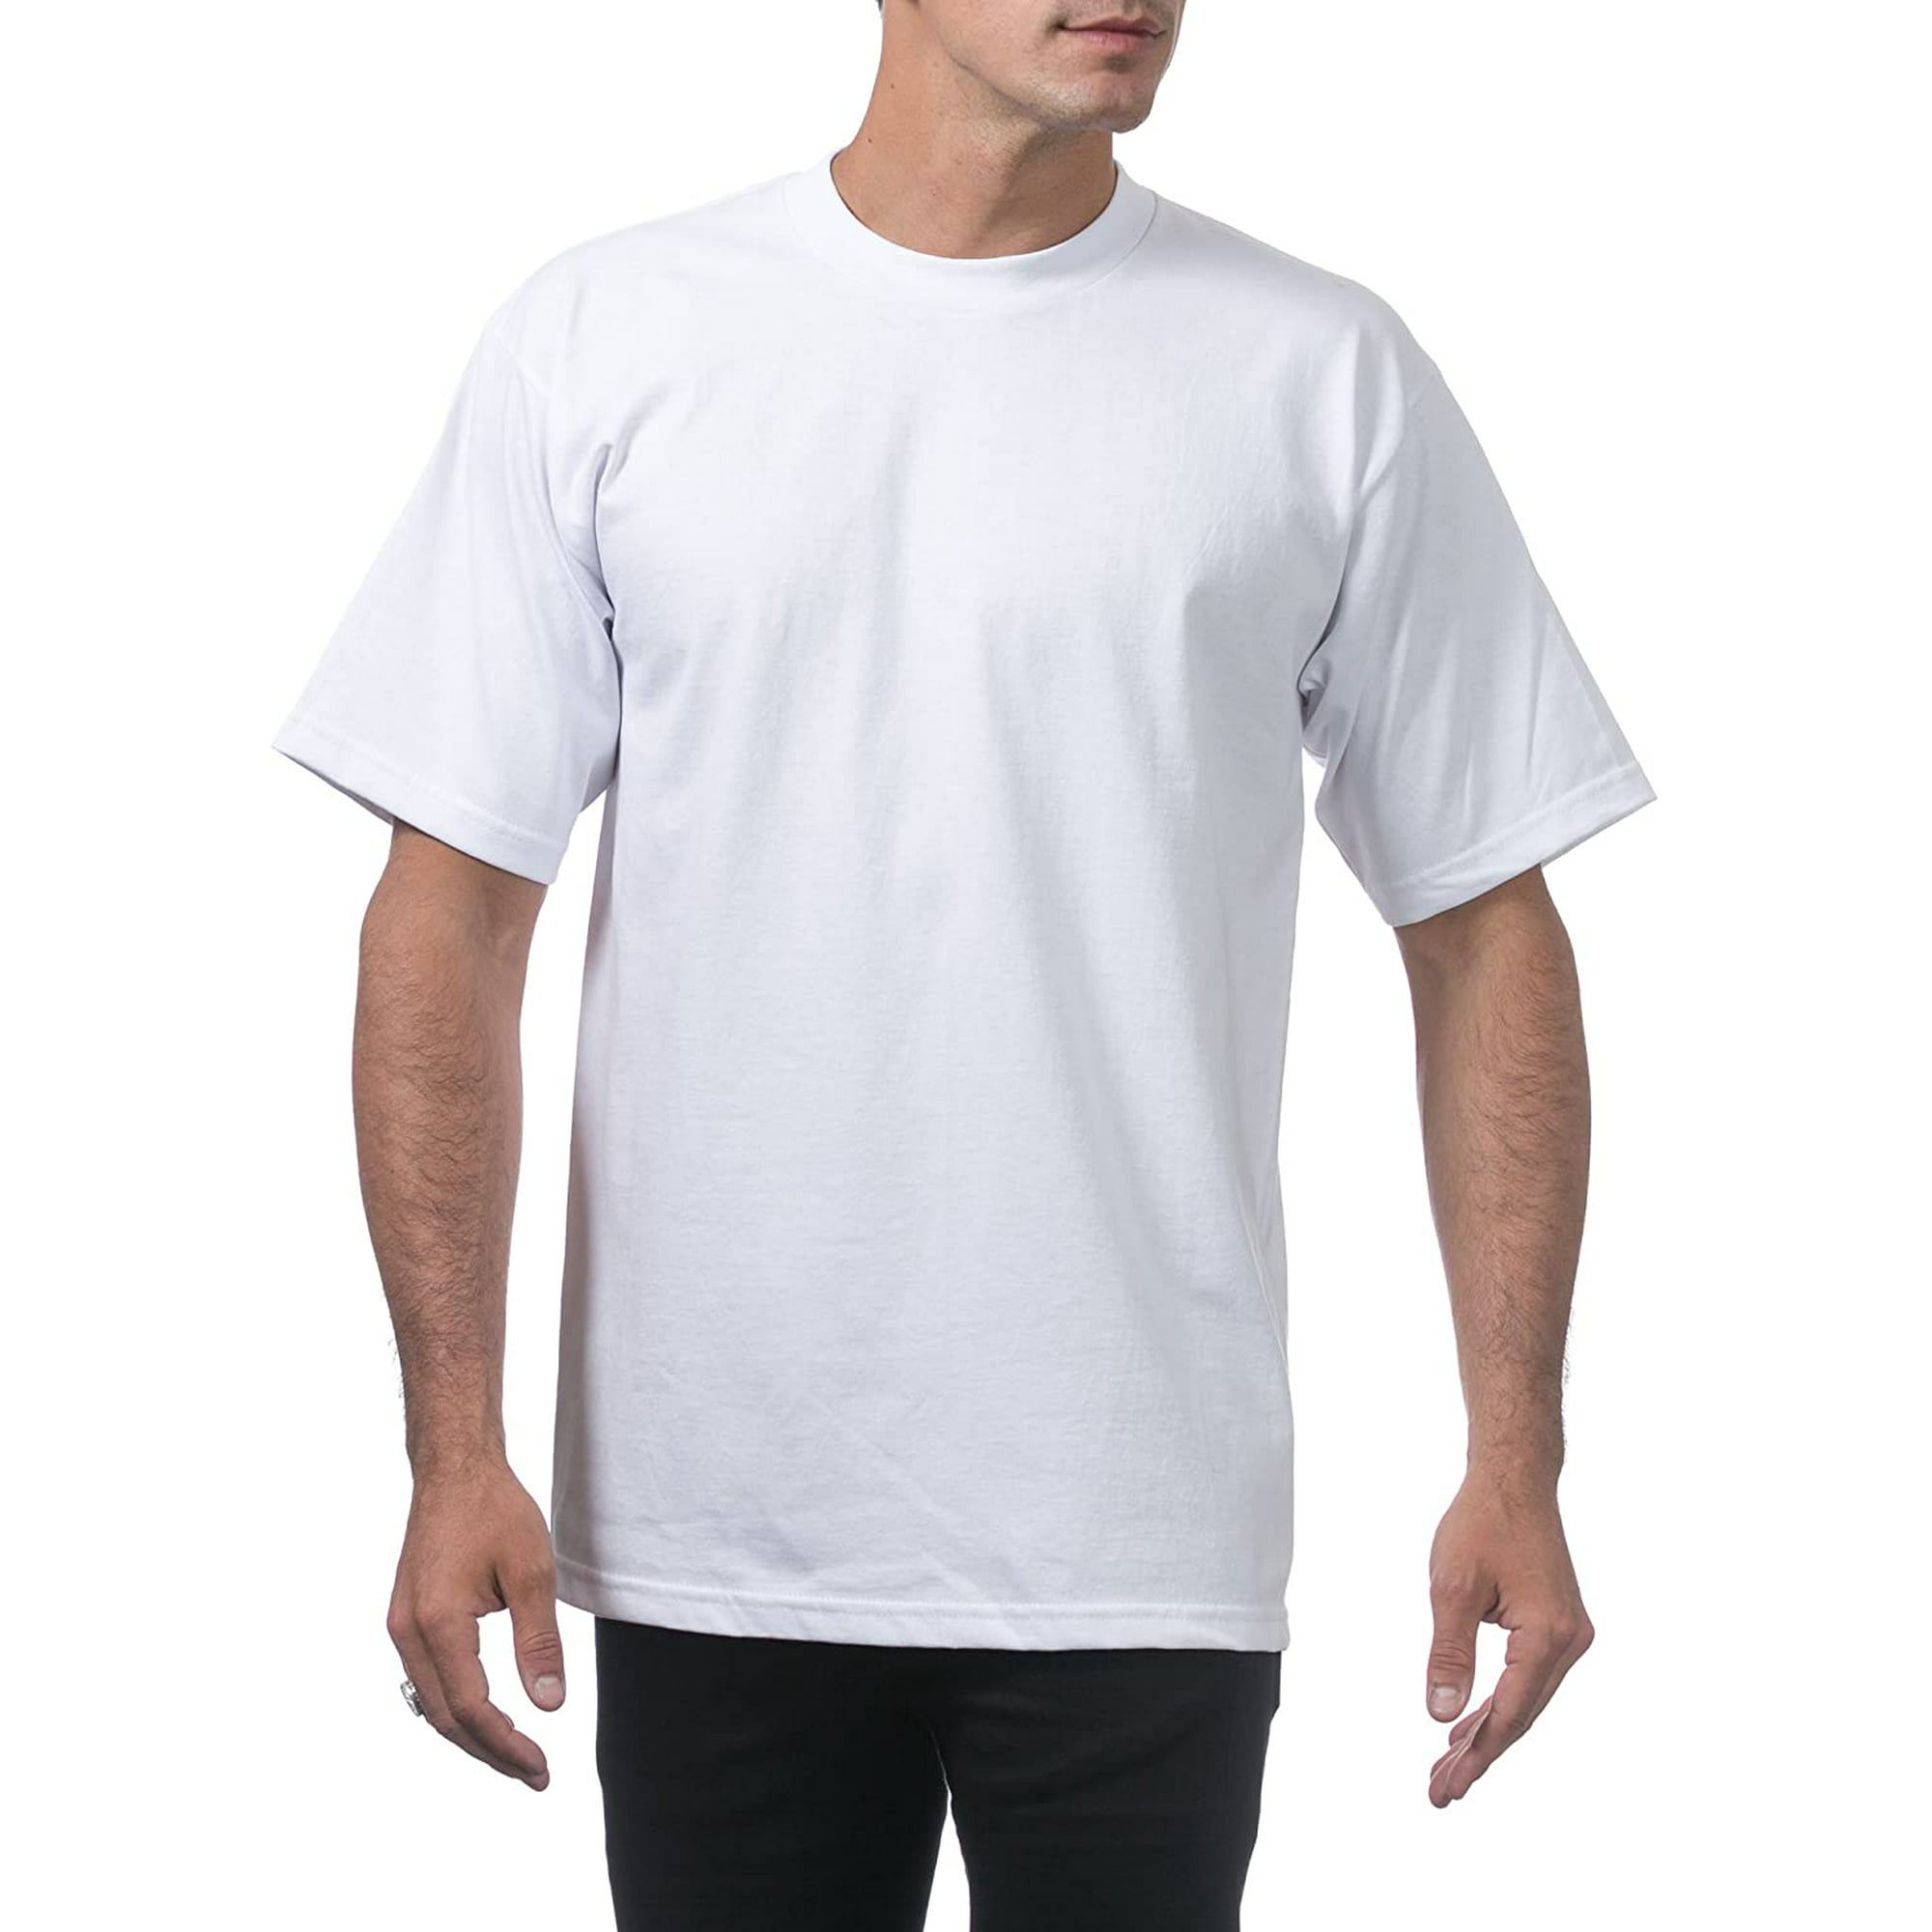 Pro Club Men's Cotton Sleeve Crew T-Shirt - Walmart .com